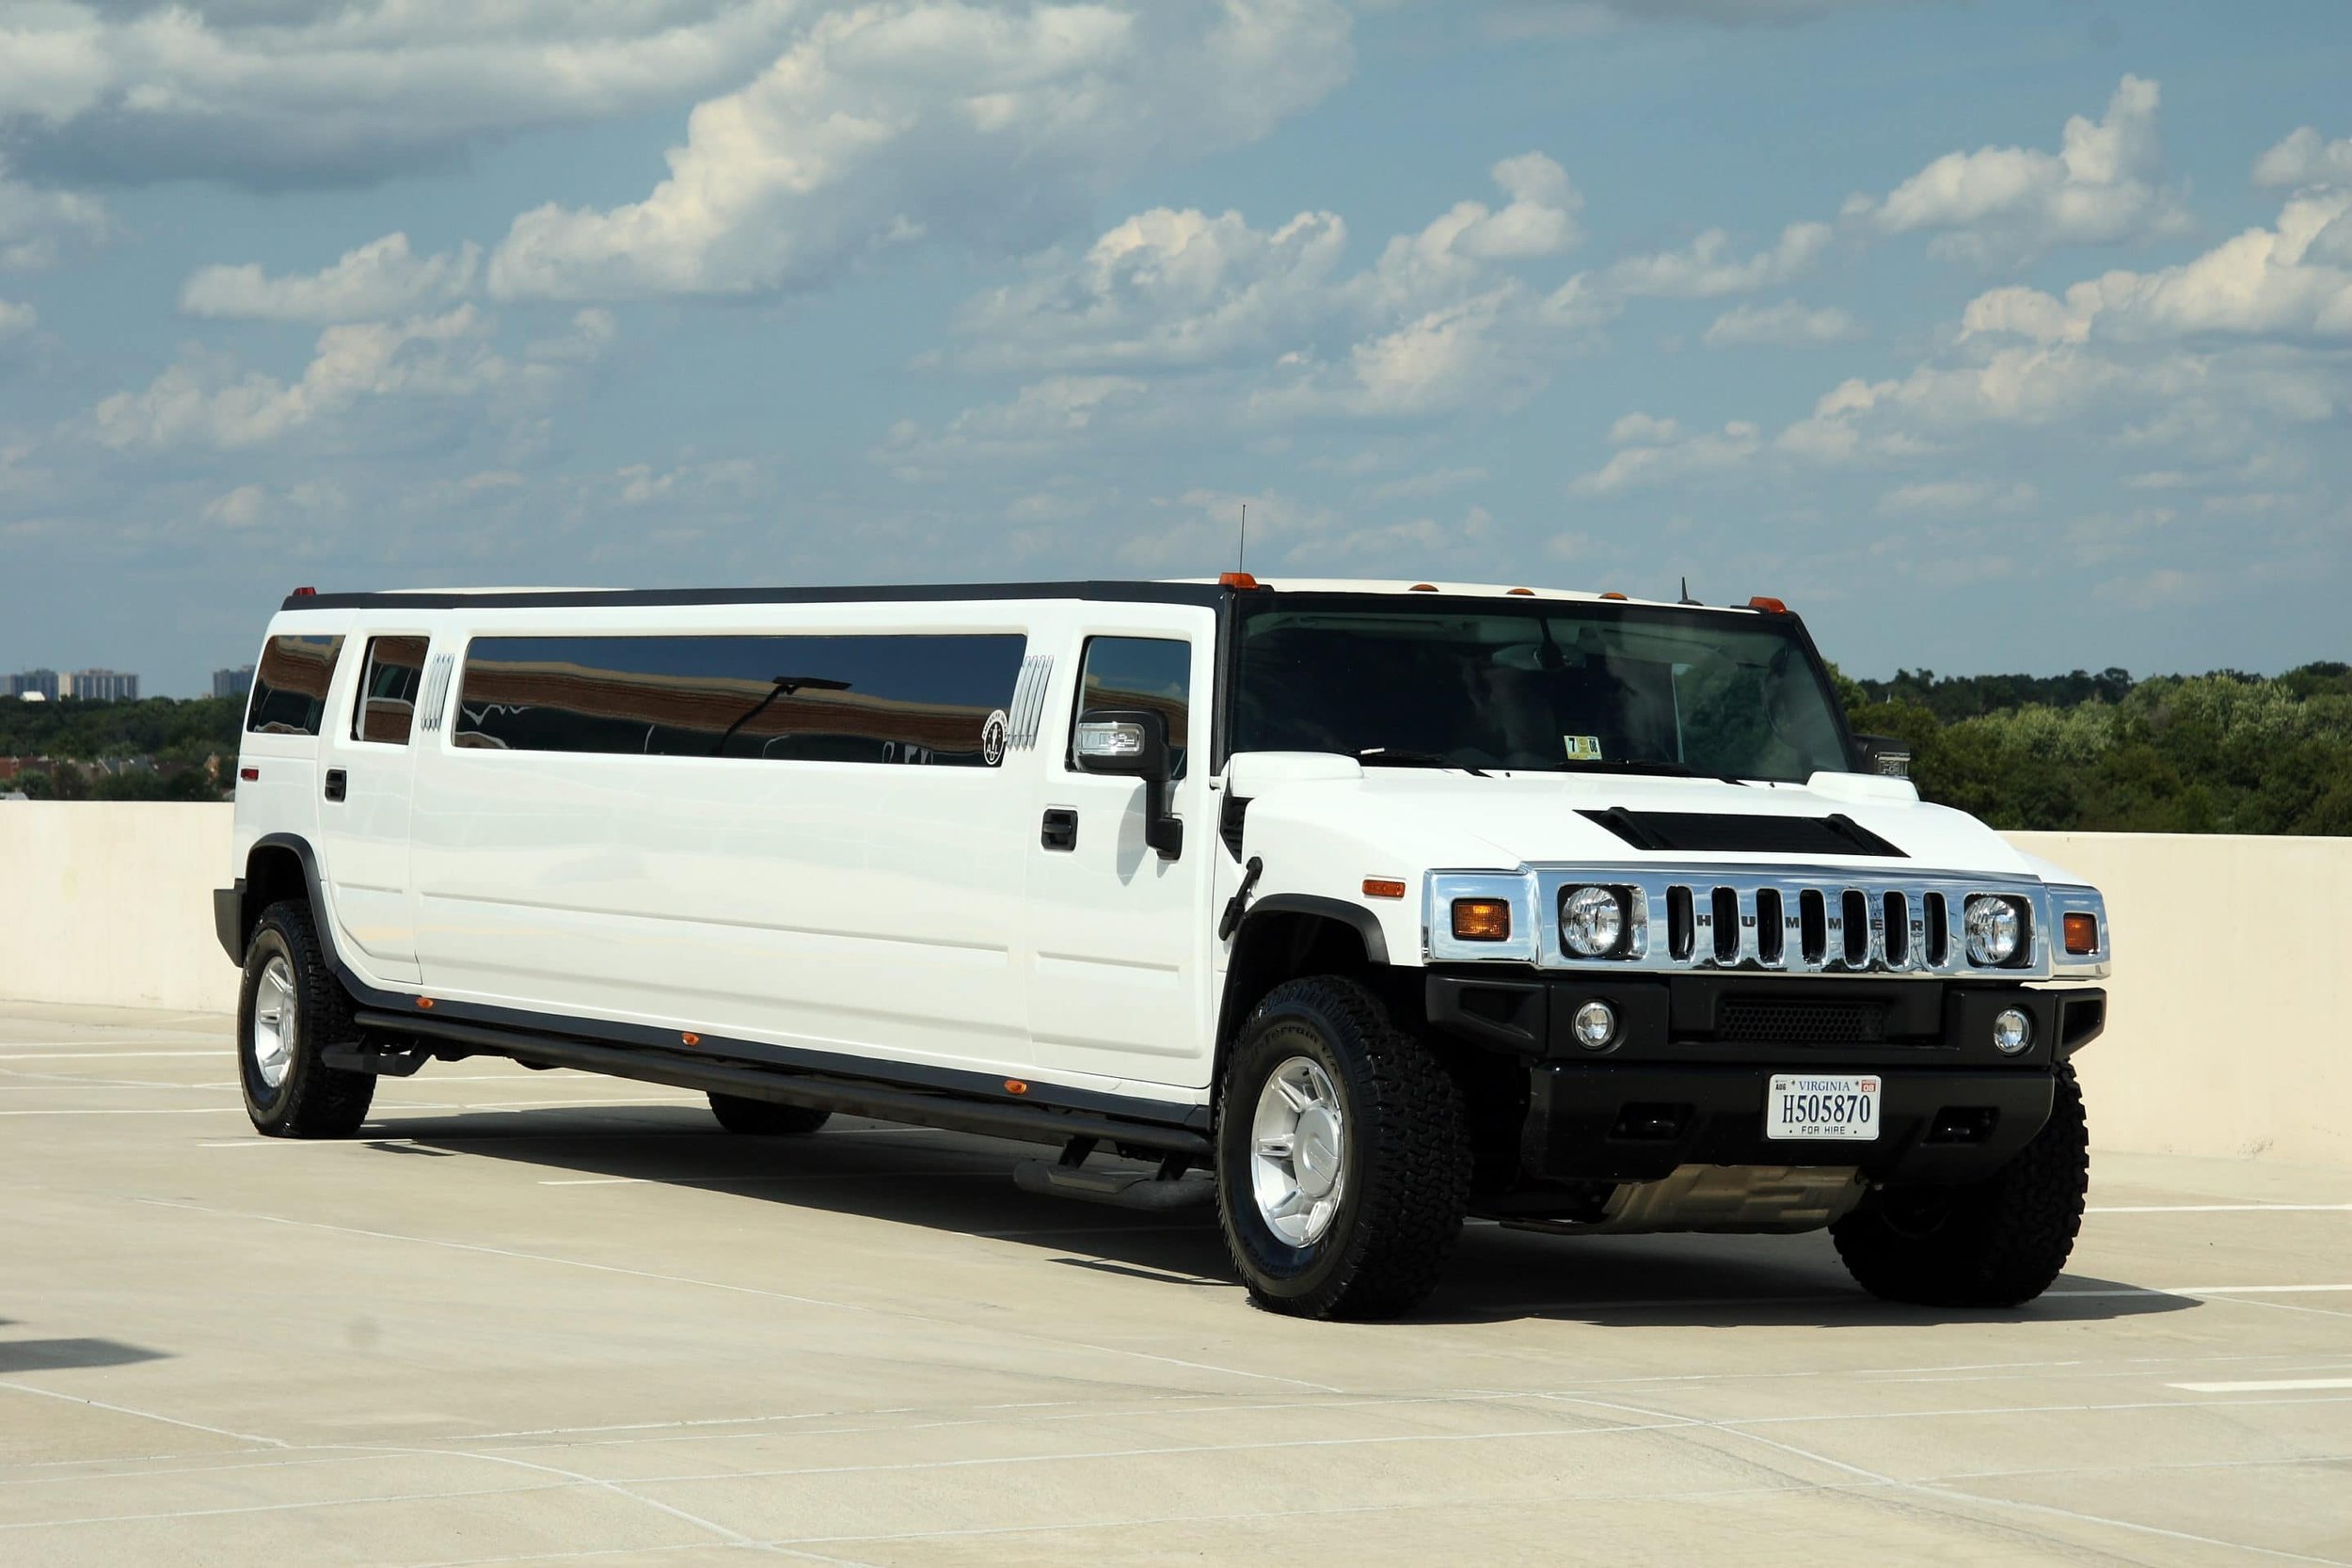 image of a hummer limo